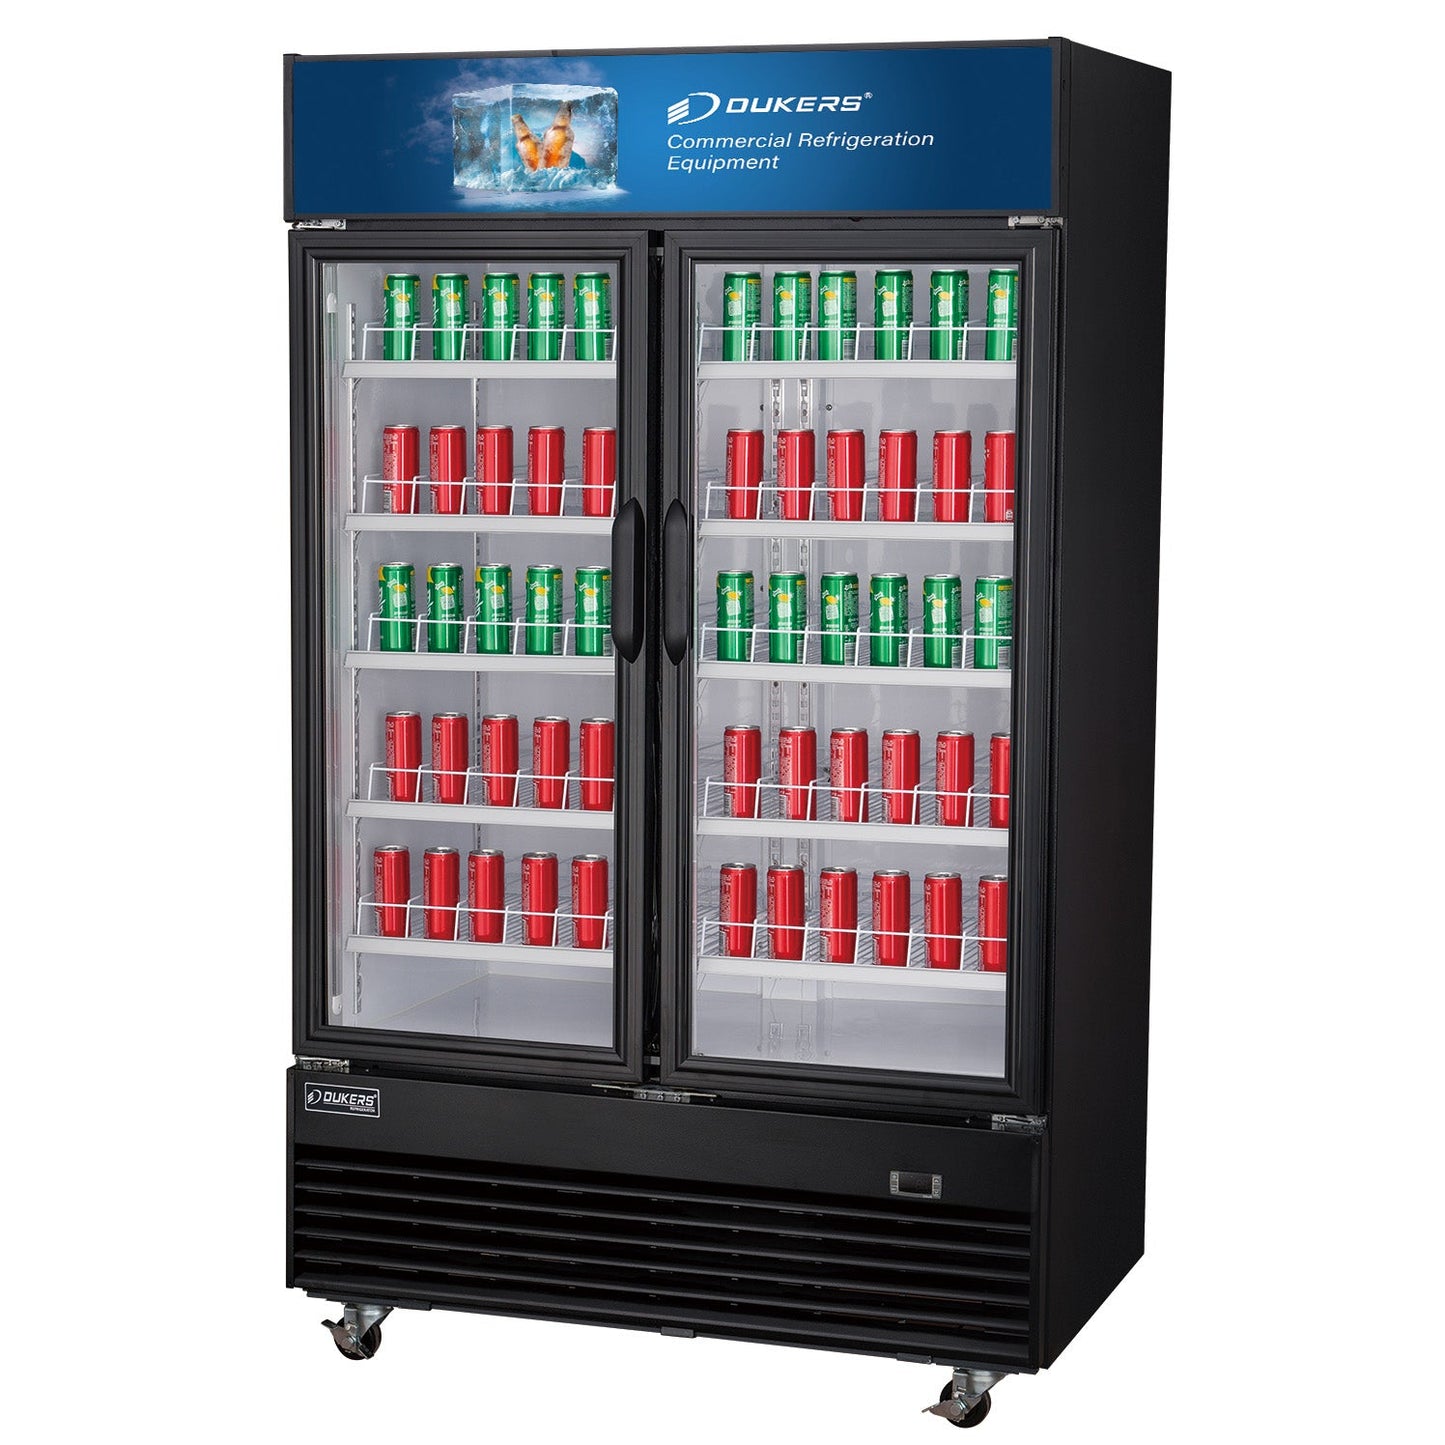 Dukers DSM-41R 2-Doors Merchandiser Refrigerator